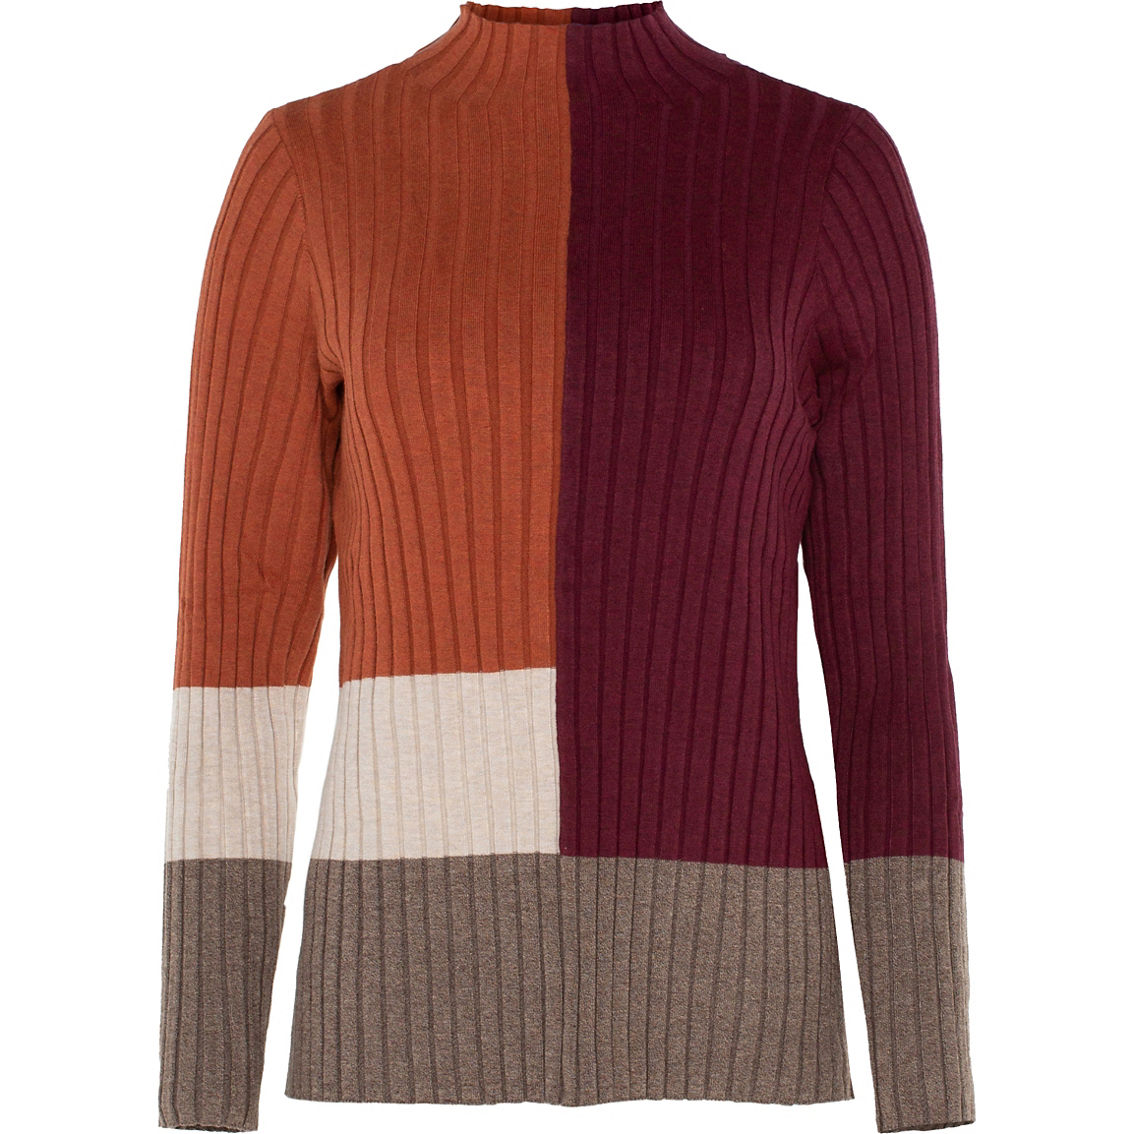 Liverpool Mock Colorblock Sweater - Image 3 of 3